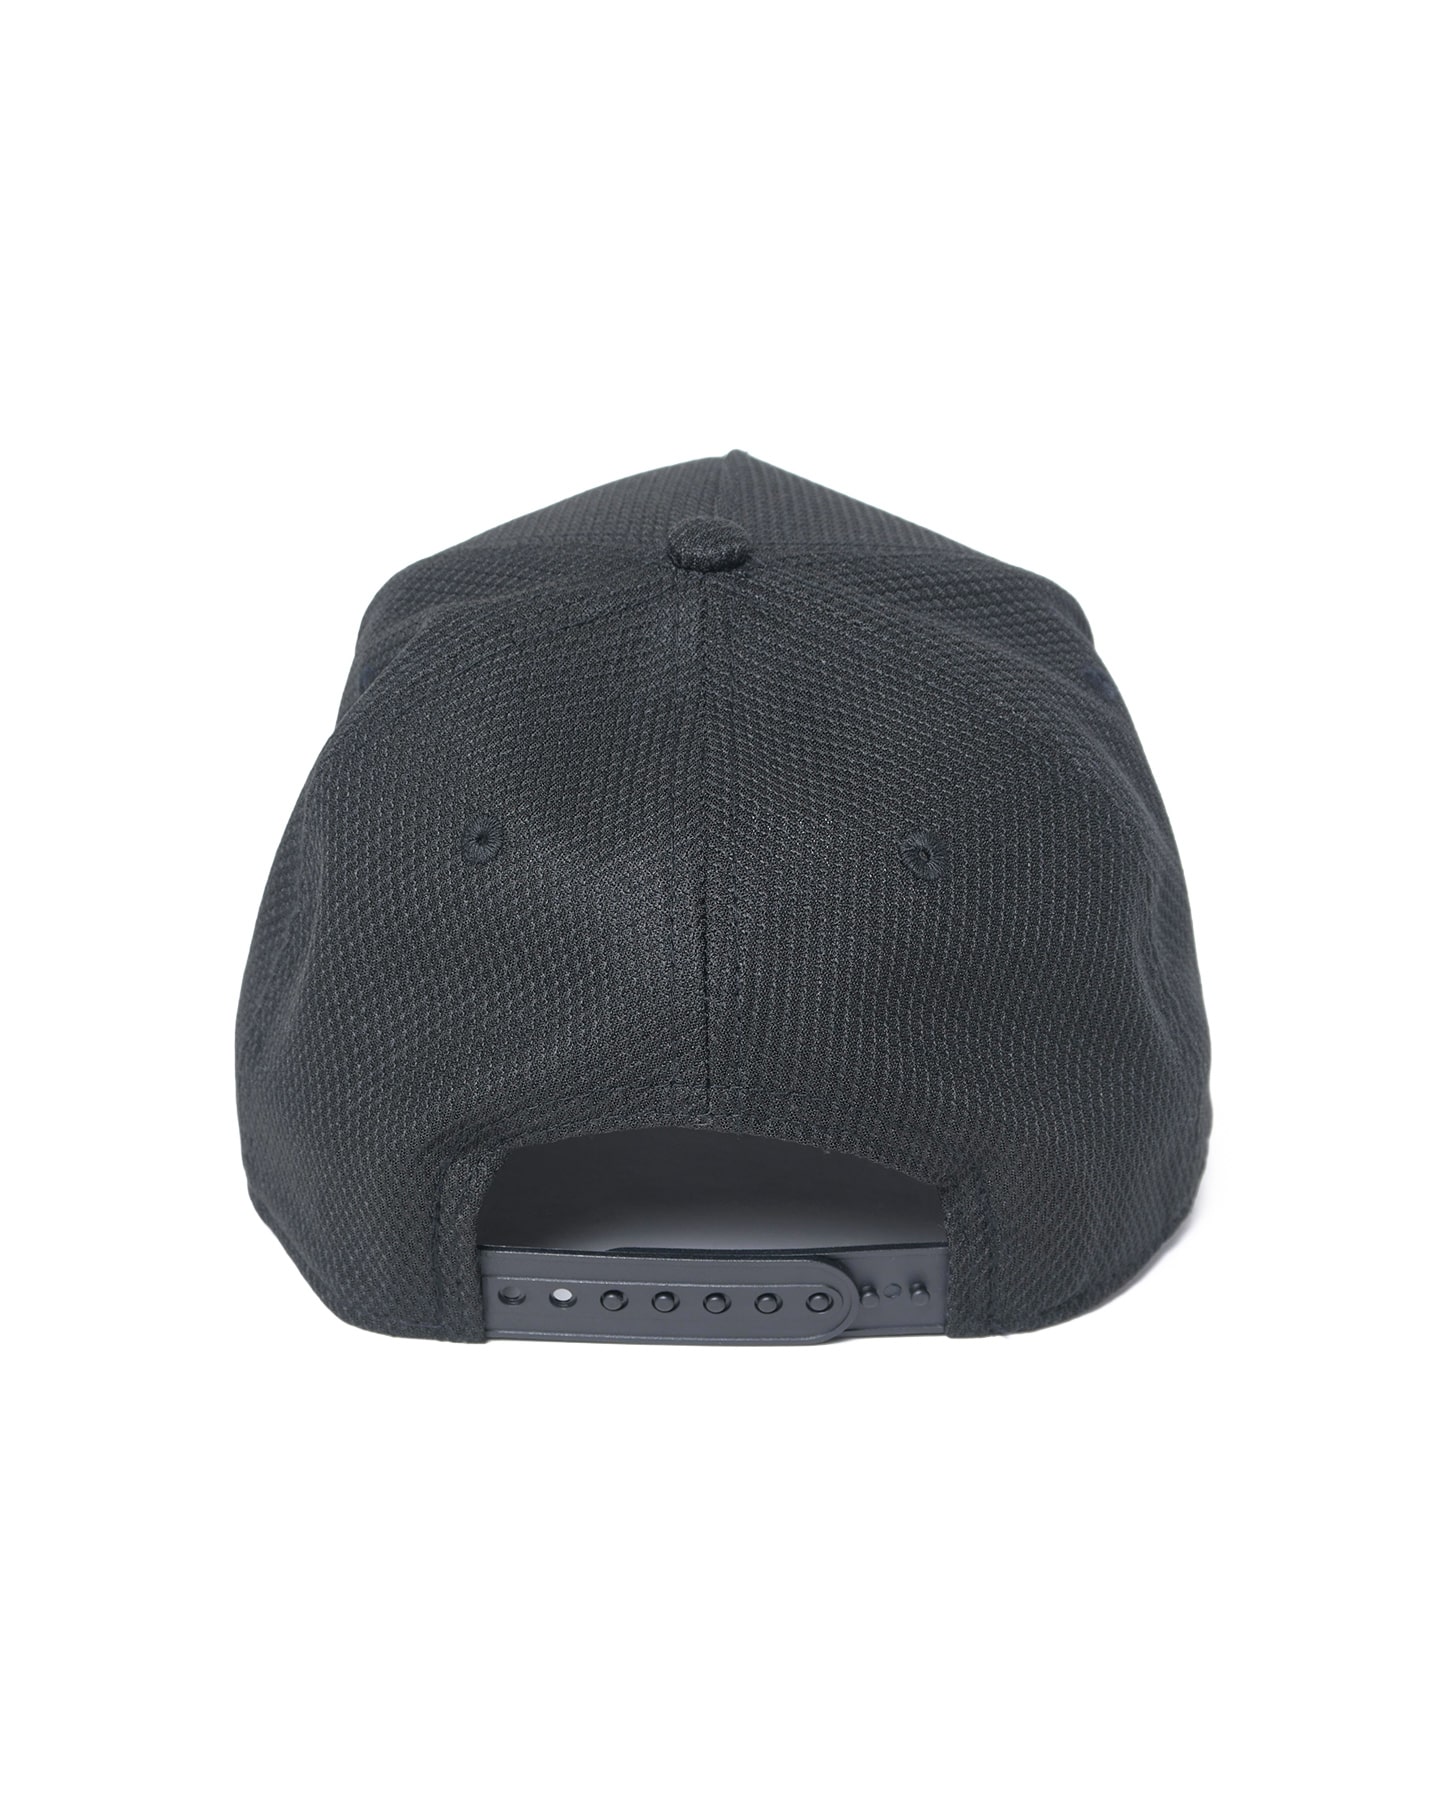 FCRB NEW ERA EMBLEM 9FORTY A-FRAME CAP 帽